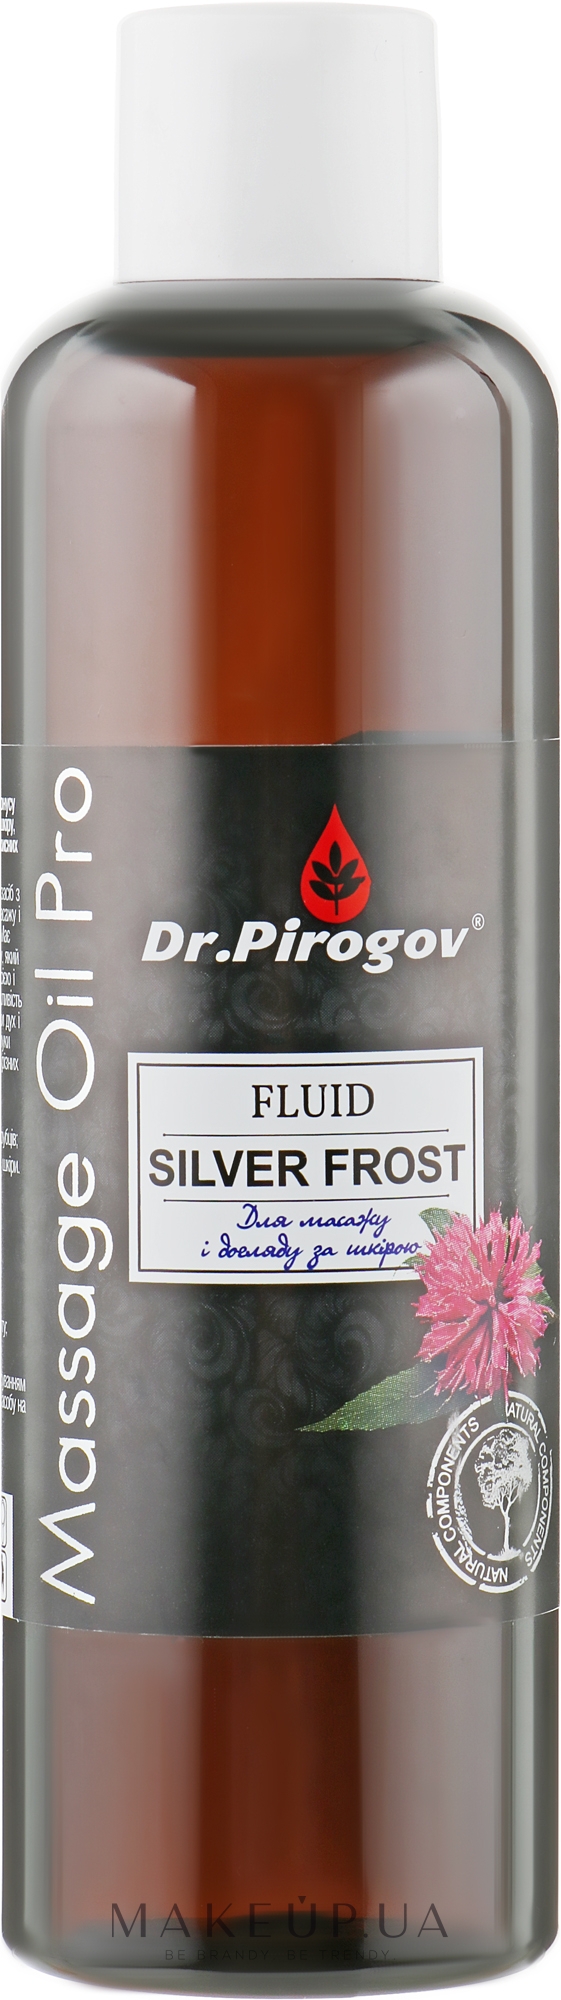 Масло для массажа и ухода за кожей с ароматом бергамота - Dr.Pirogov Fluid Silver Frost Massage Oil — фото 200ml